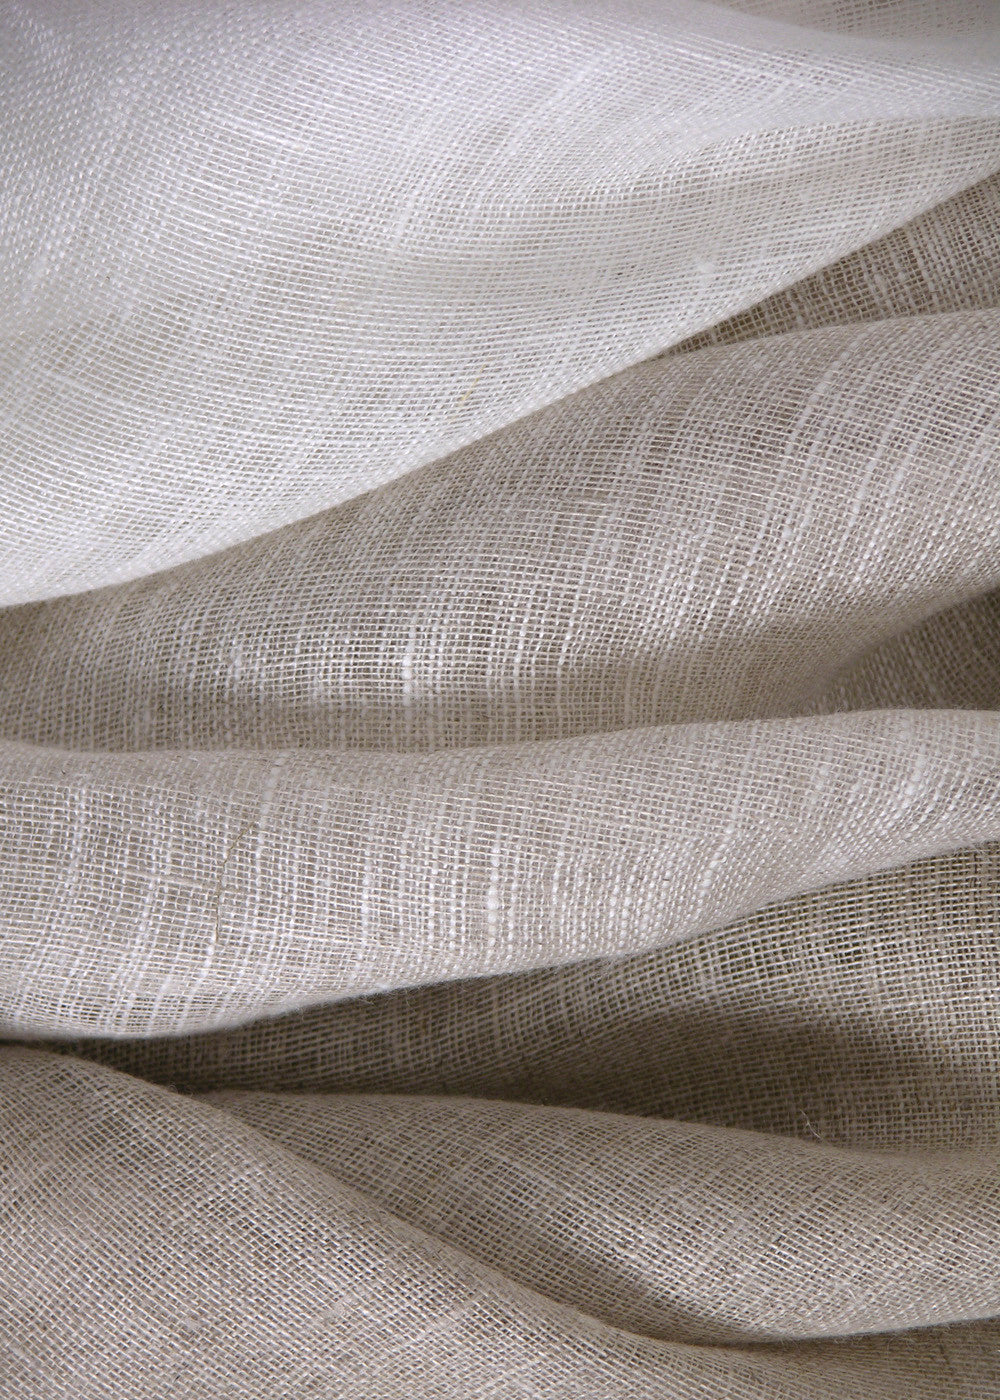 sheer linen fabrics 